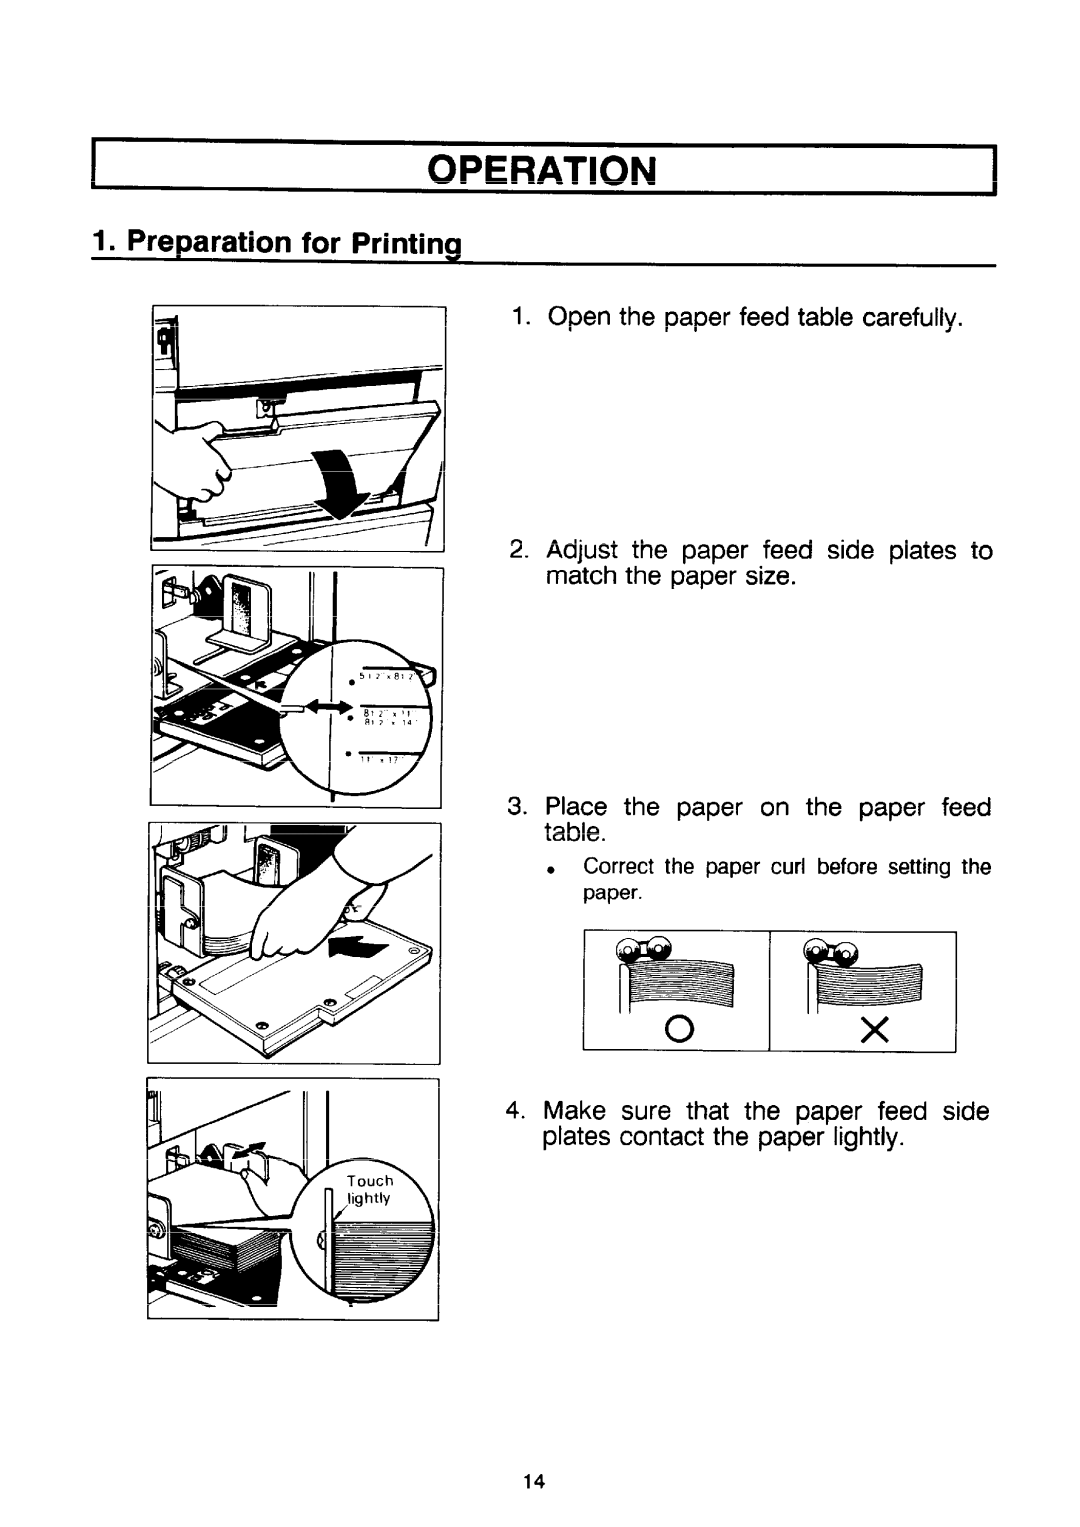 Ricoh PRIPORT VT2130 manual Operation, Preparation for Printing 